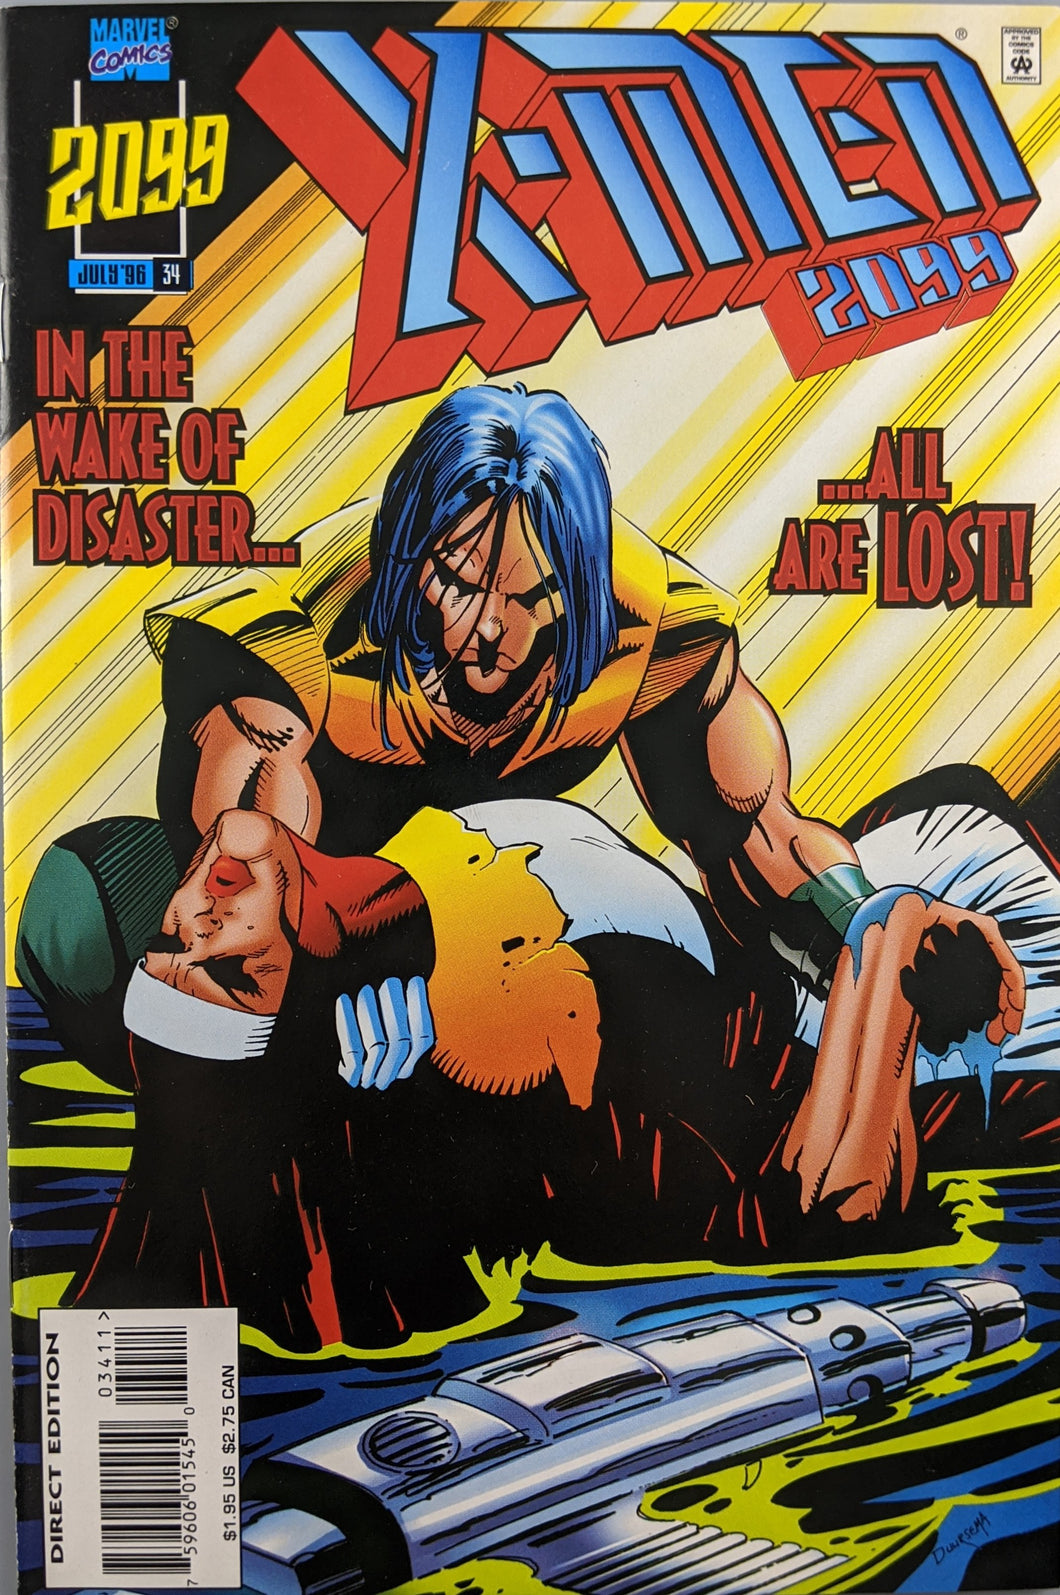 X-Men 2099 (1993) #34